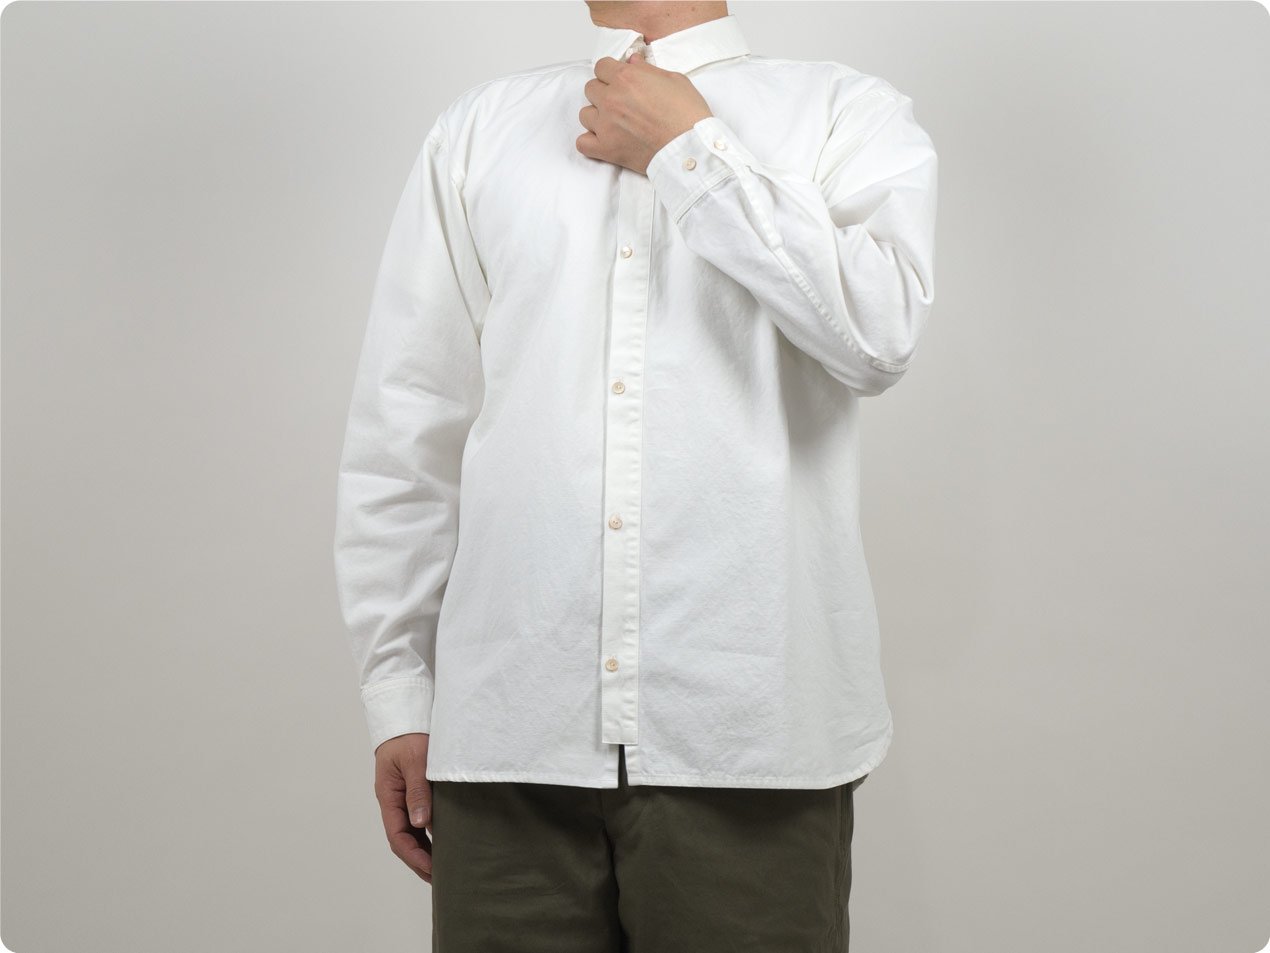 POSTALCO Free Arm Shirt 01 OFF WHITE